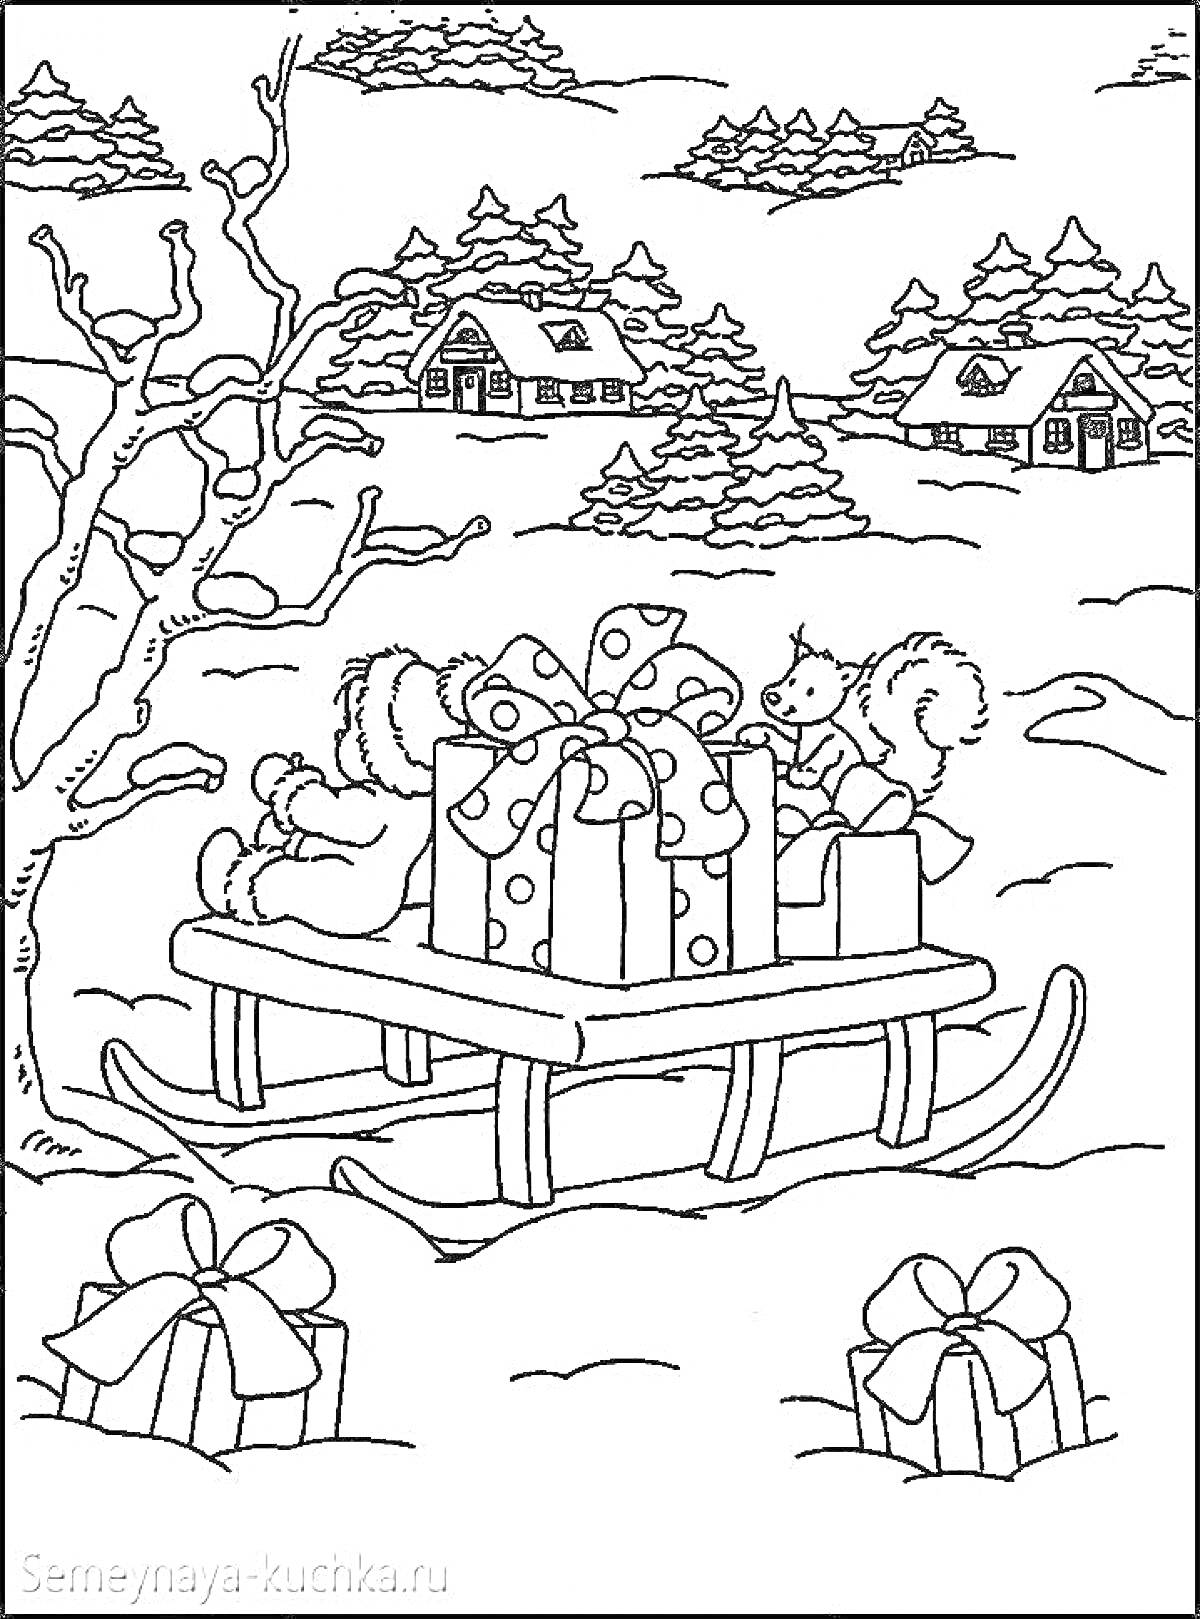 На раскраске изображено: Рождество, Подарки, Белка, Зима, Снег, Деревья, Деревня, Домик, Праздники, Сани